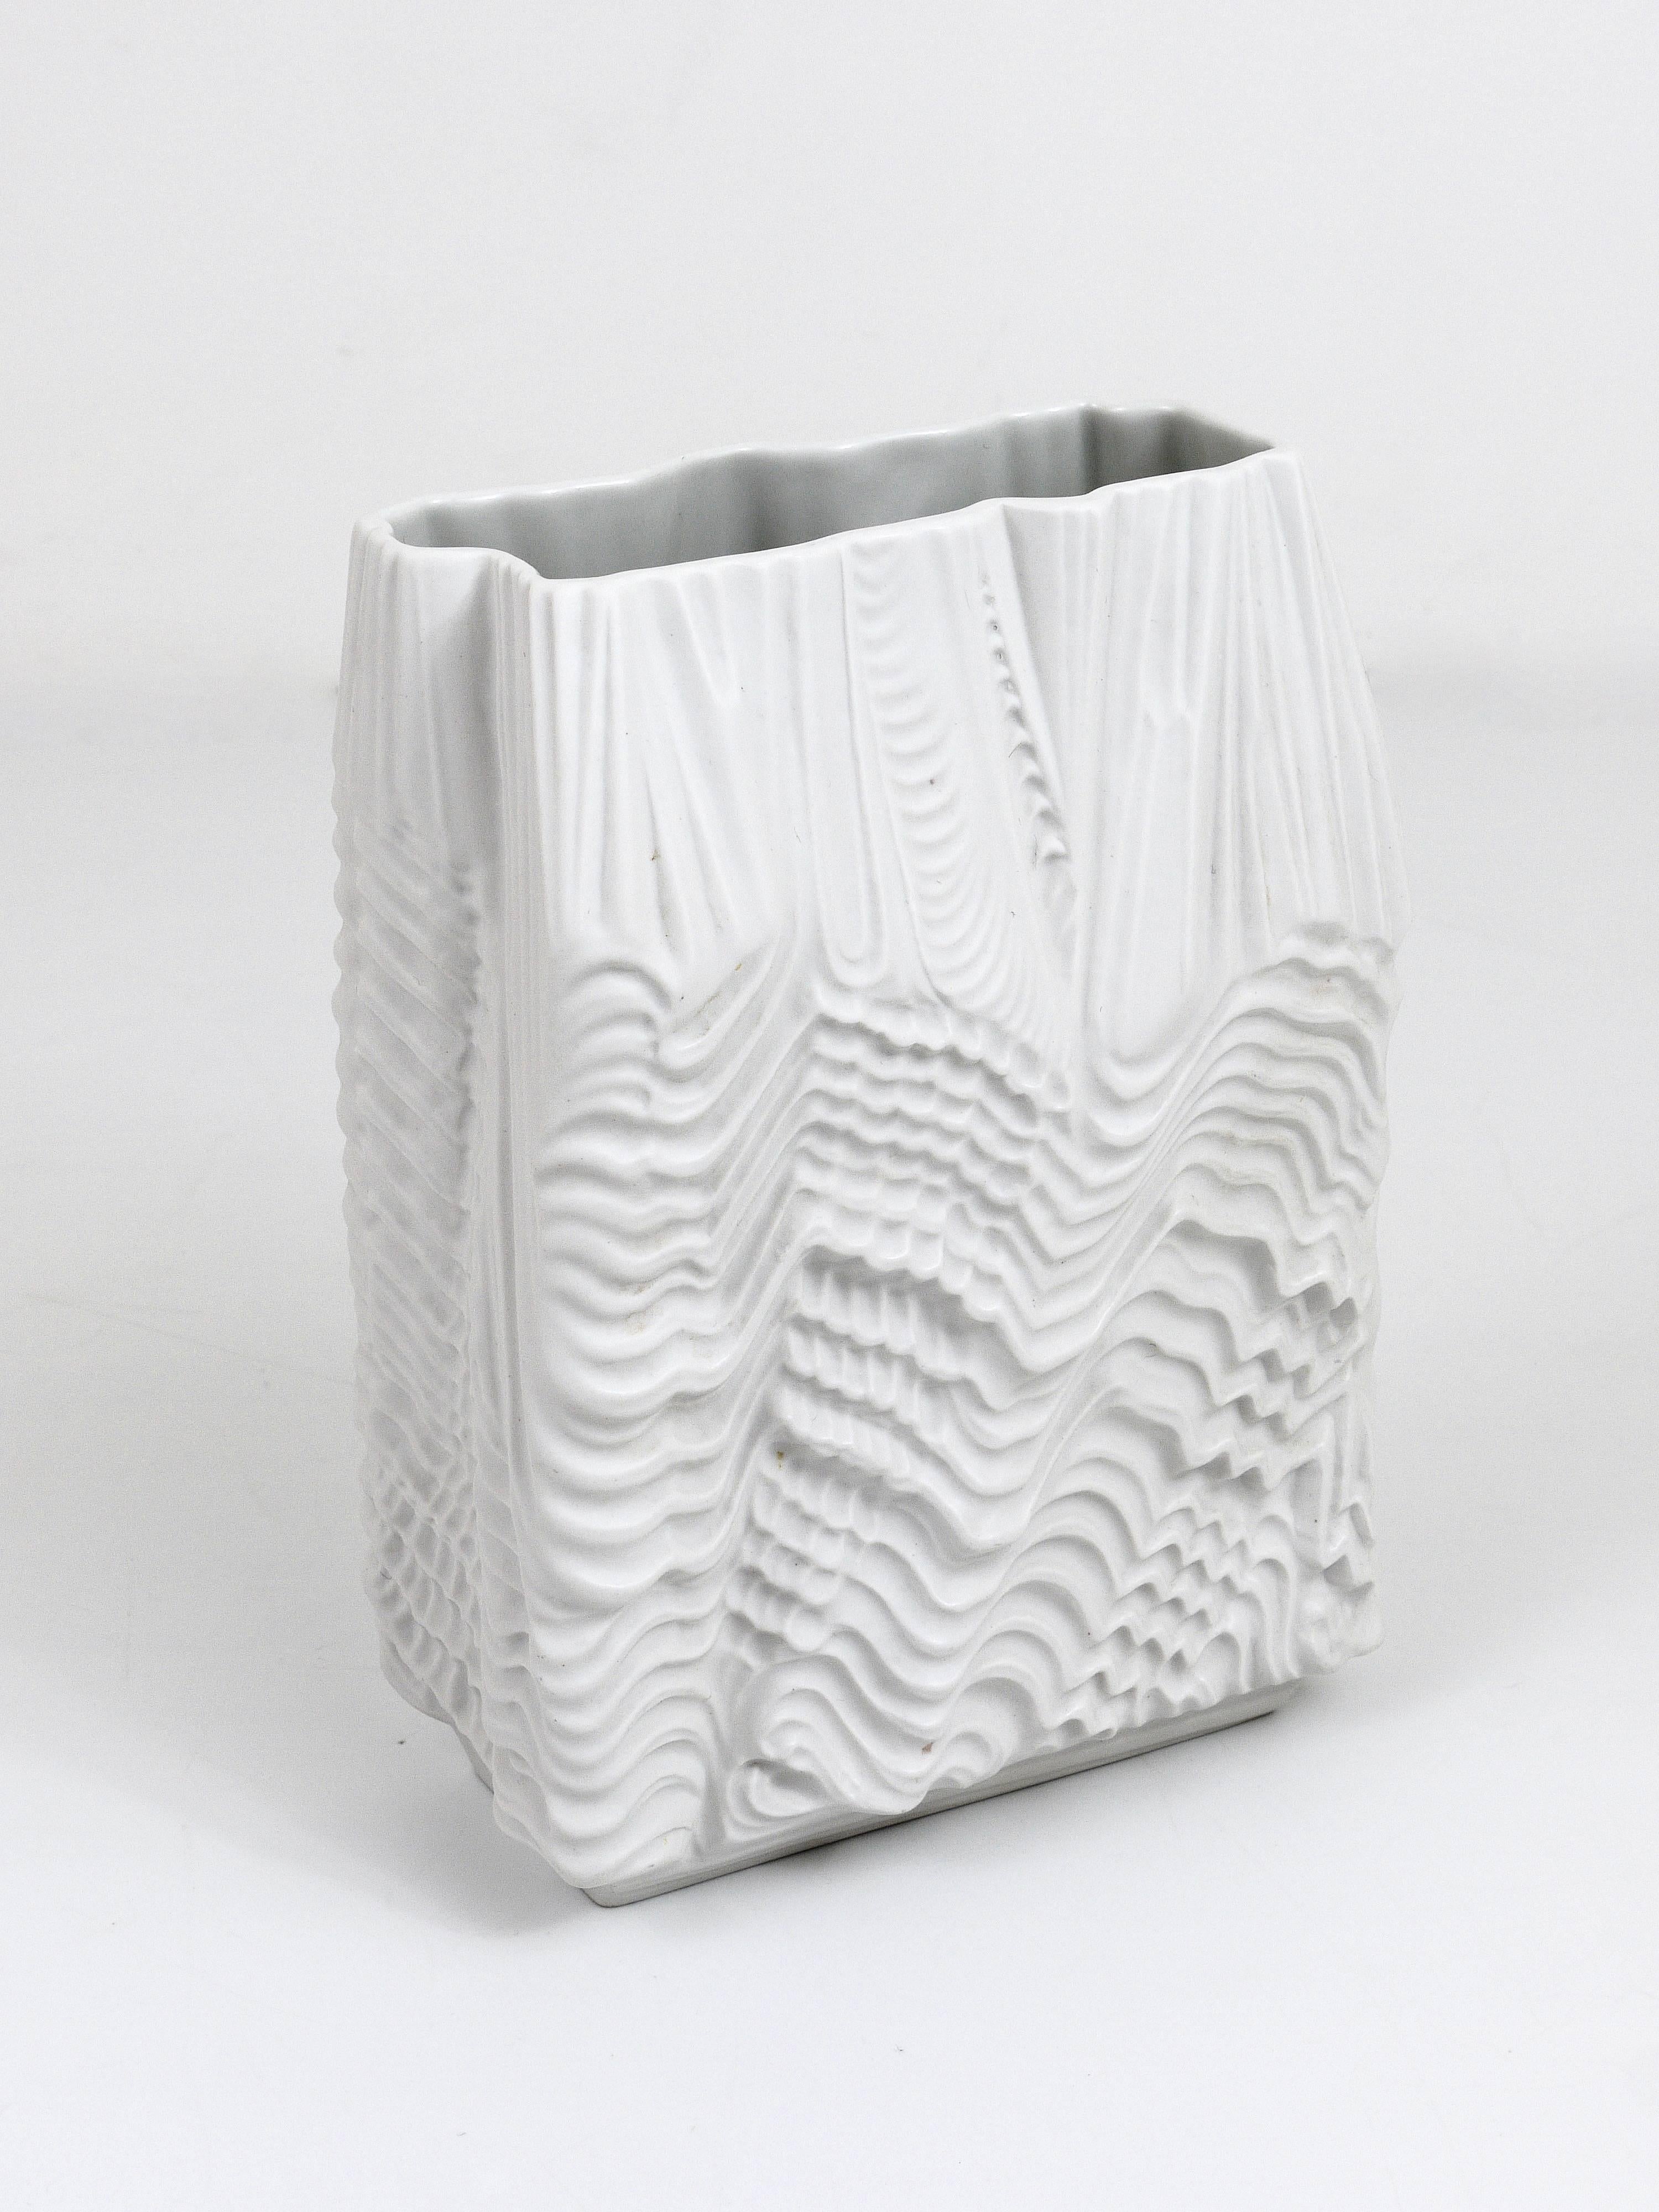 Large Martin Freyer White Porcelain Vase, Rosenthal Studio Linie, Germany, 1960 1